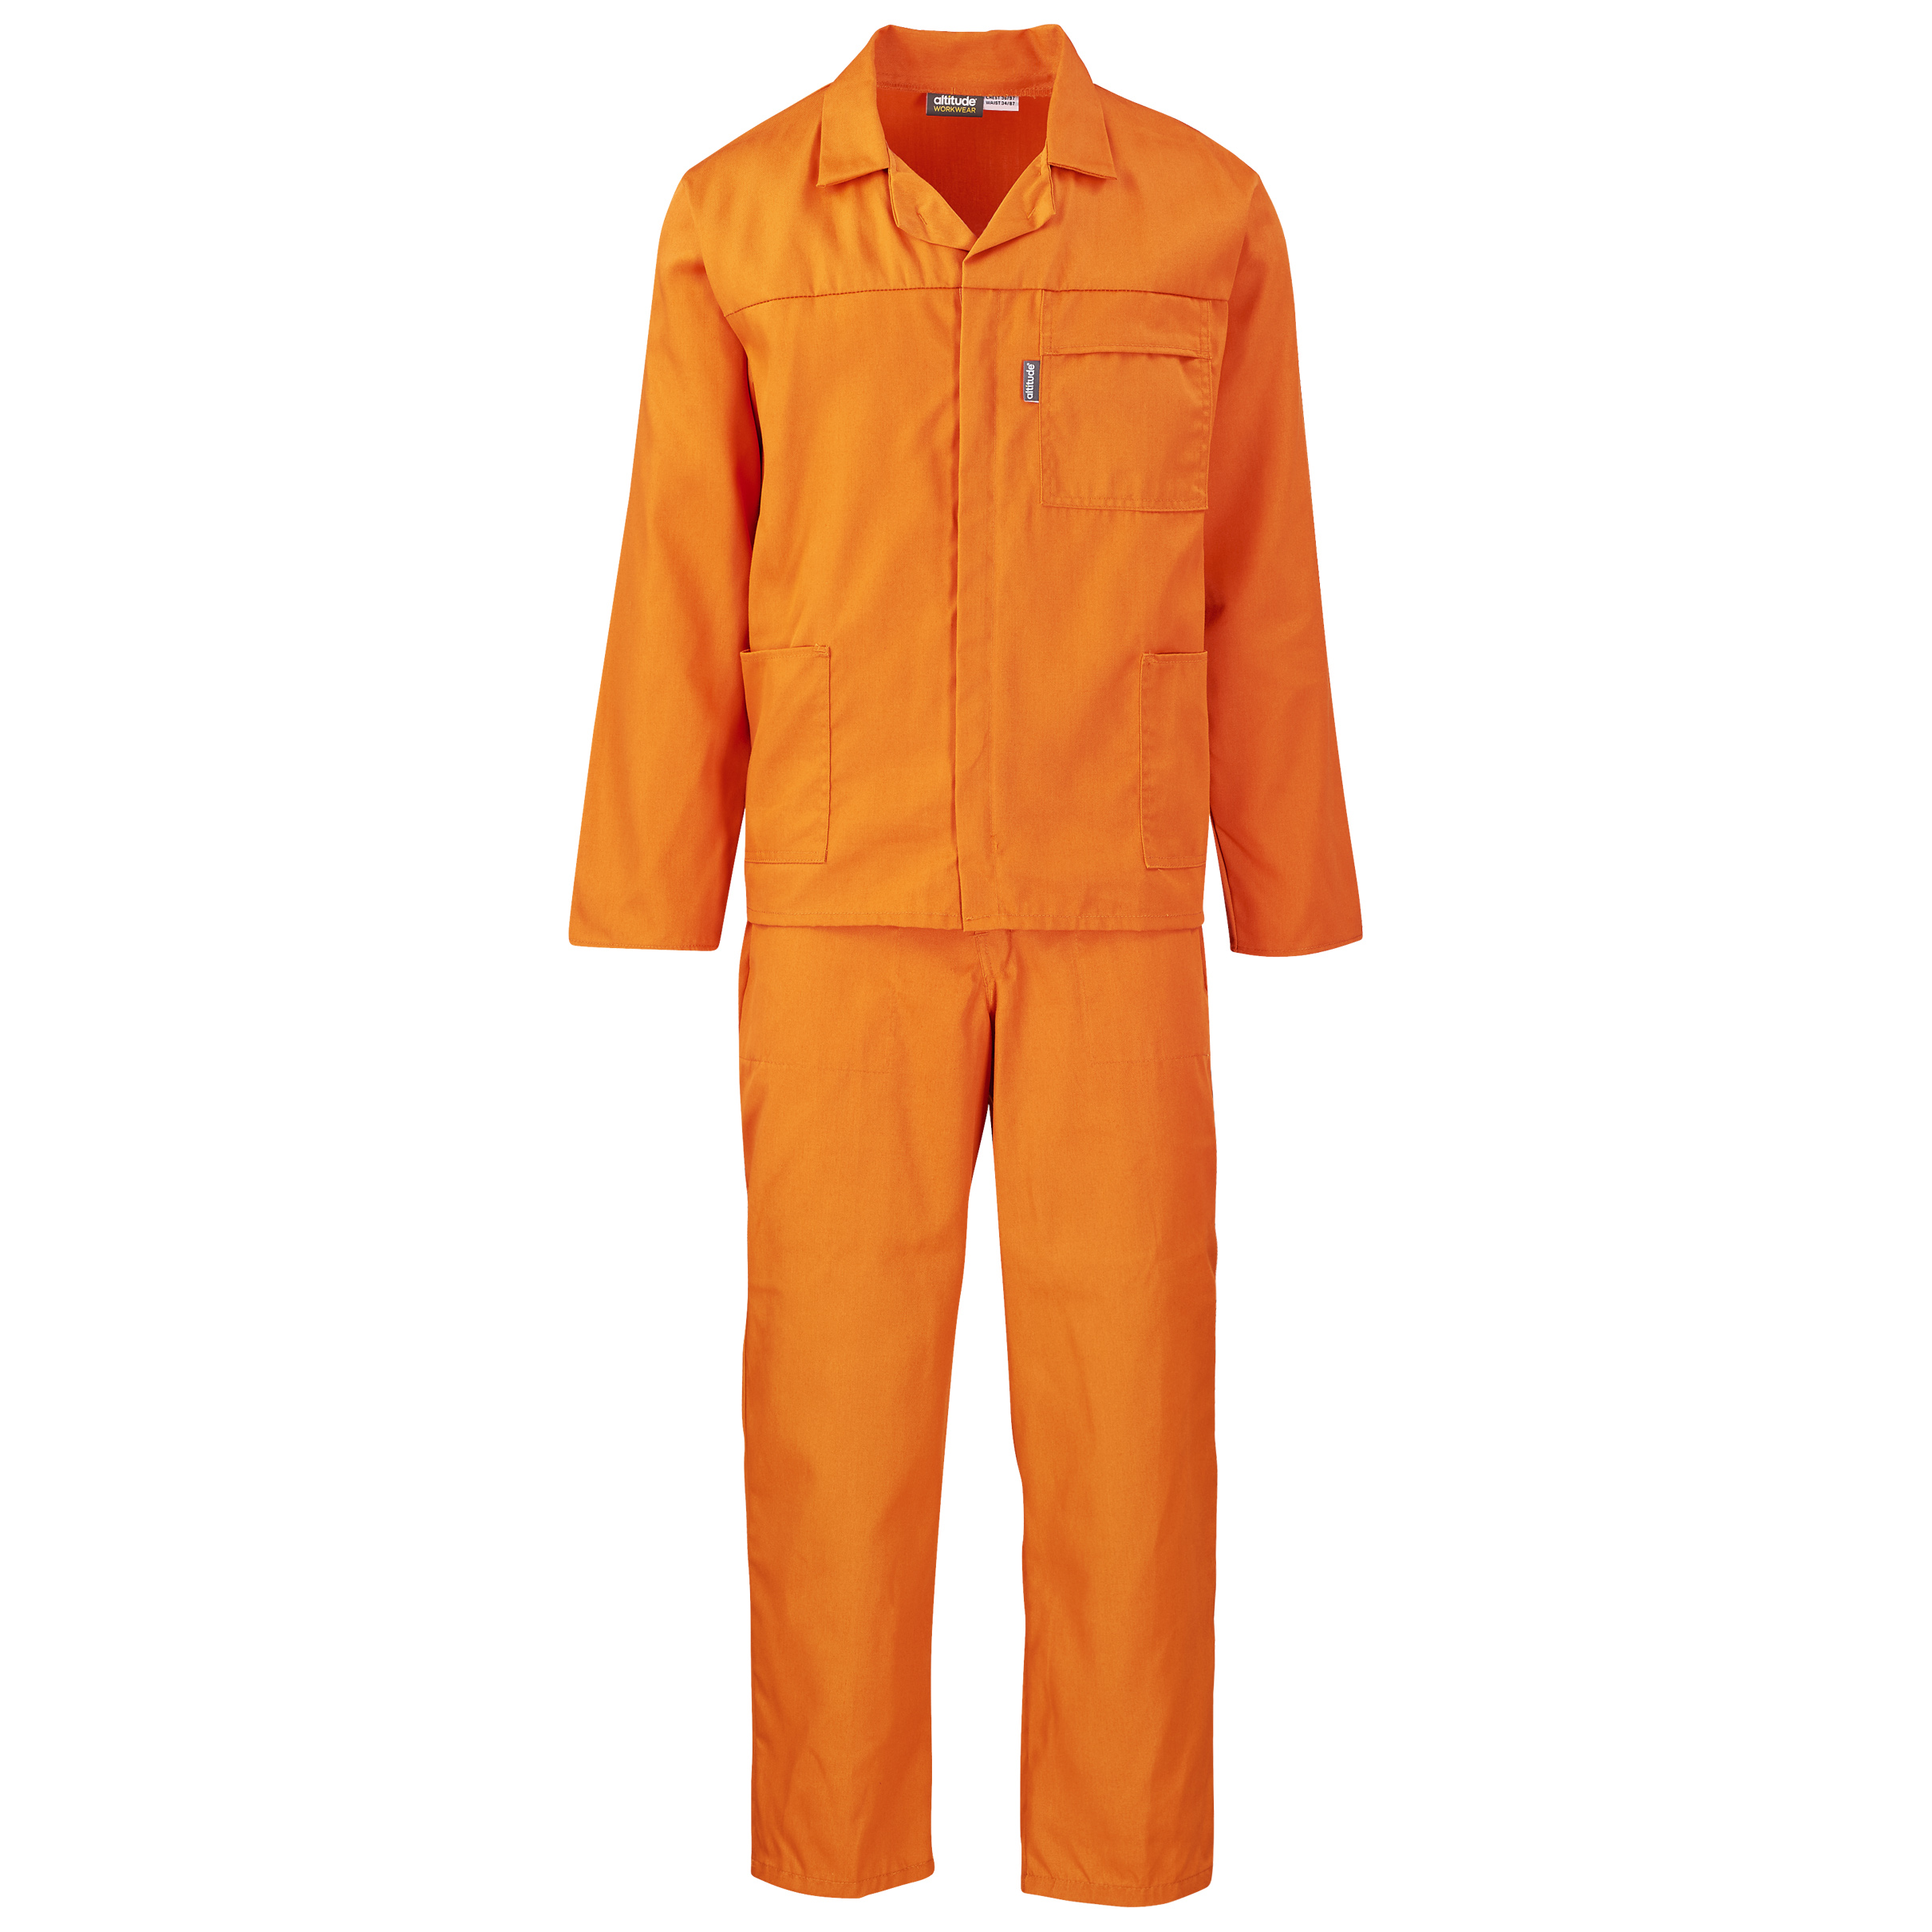 Trade Polycotton Conti Suit ALT-1101-O_default by brandxellence workwear